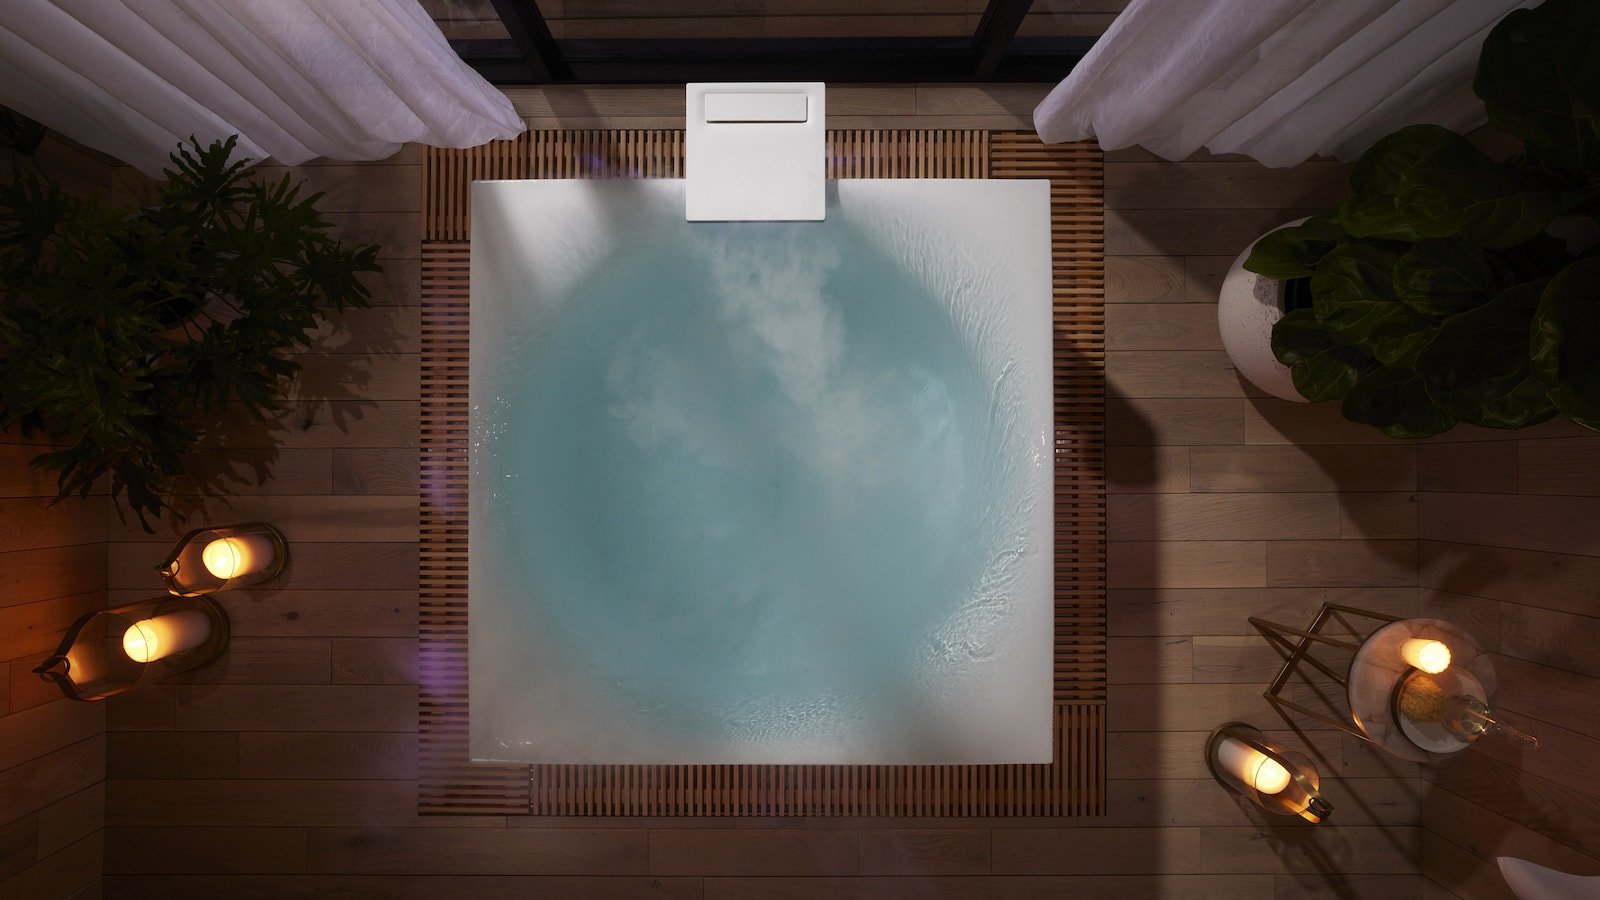 Kohler Stillness Bath freestanding tub uses PerfectFill technology with a smart drain